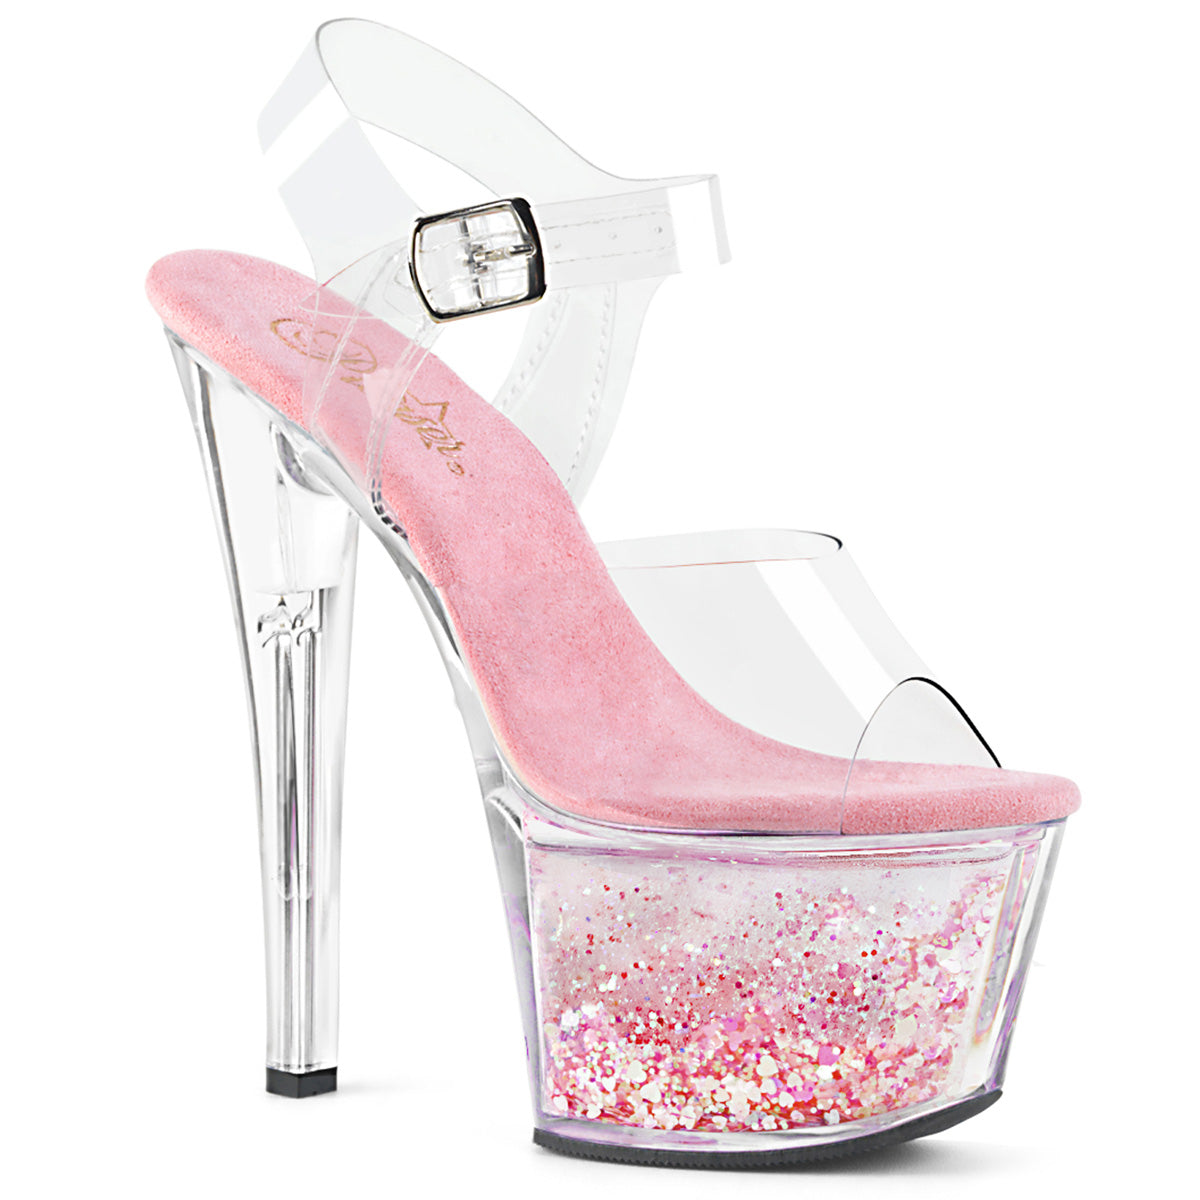 SKY-308WHG Strippers Heels Pleaser Platforms (Exotic Dancing) Clr/Clr-Baby Pink Glitter